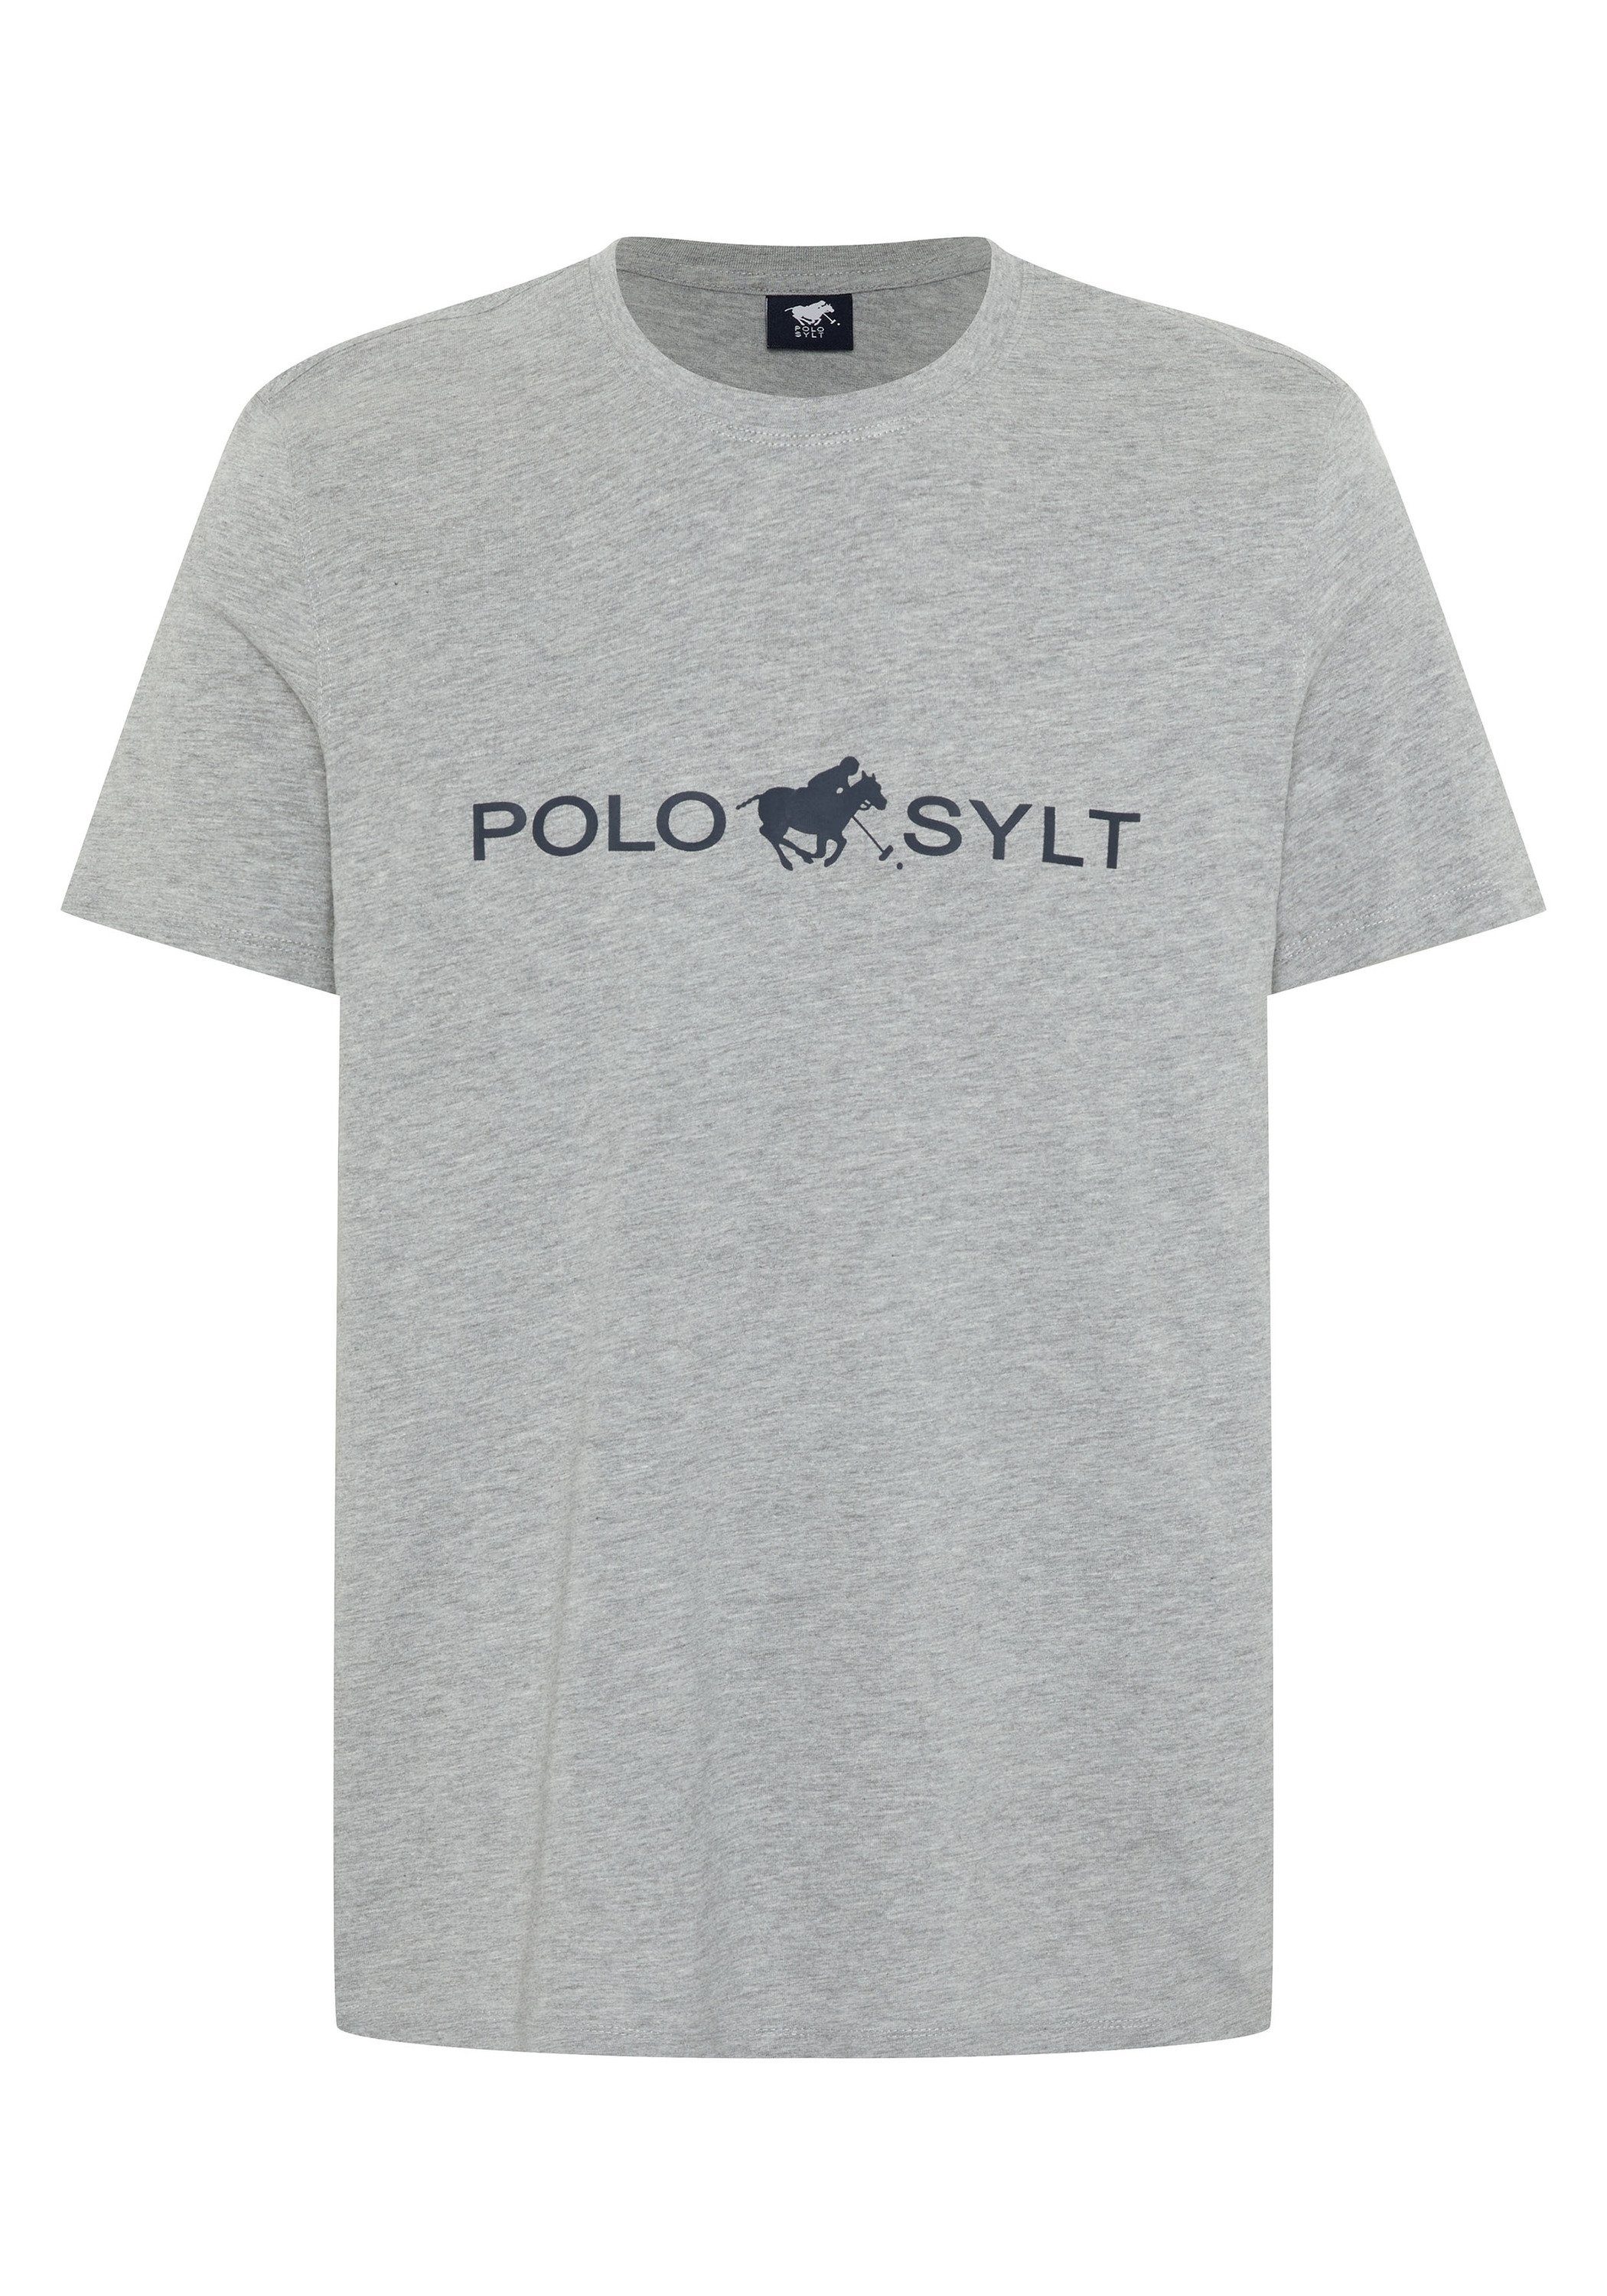 Polo Sylt Print-Shirt mit auffälligem Logo-Print 17-4402M Neutral Gray Melange